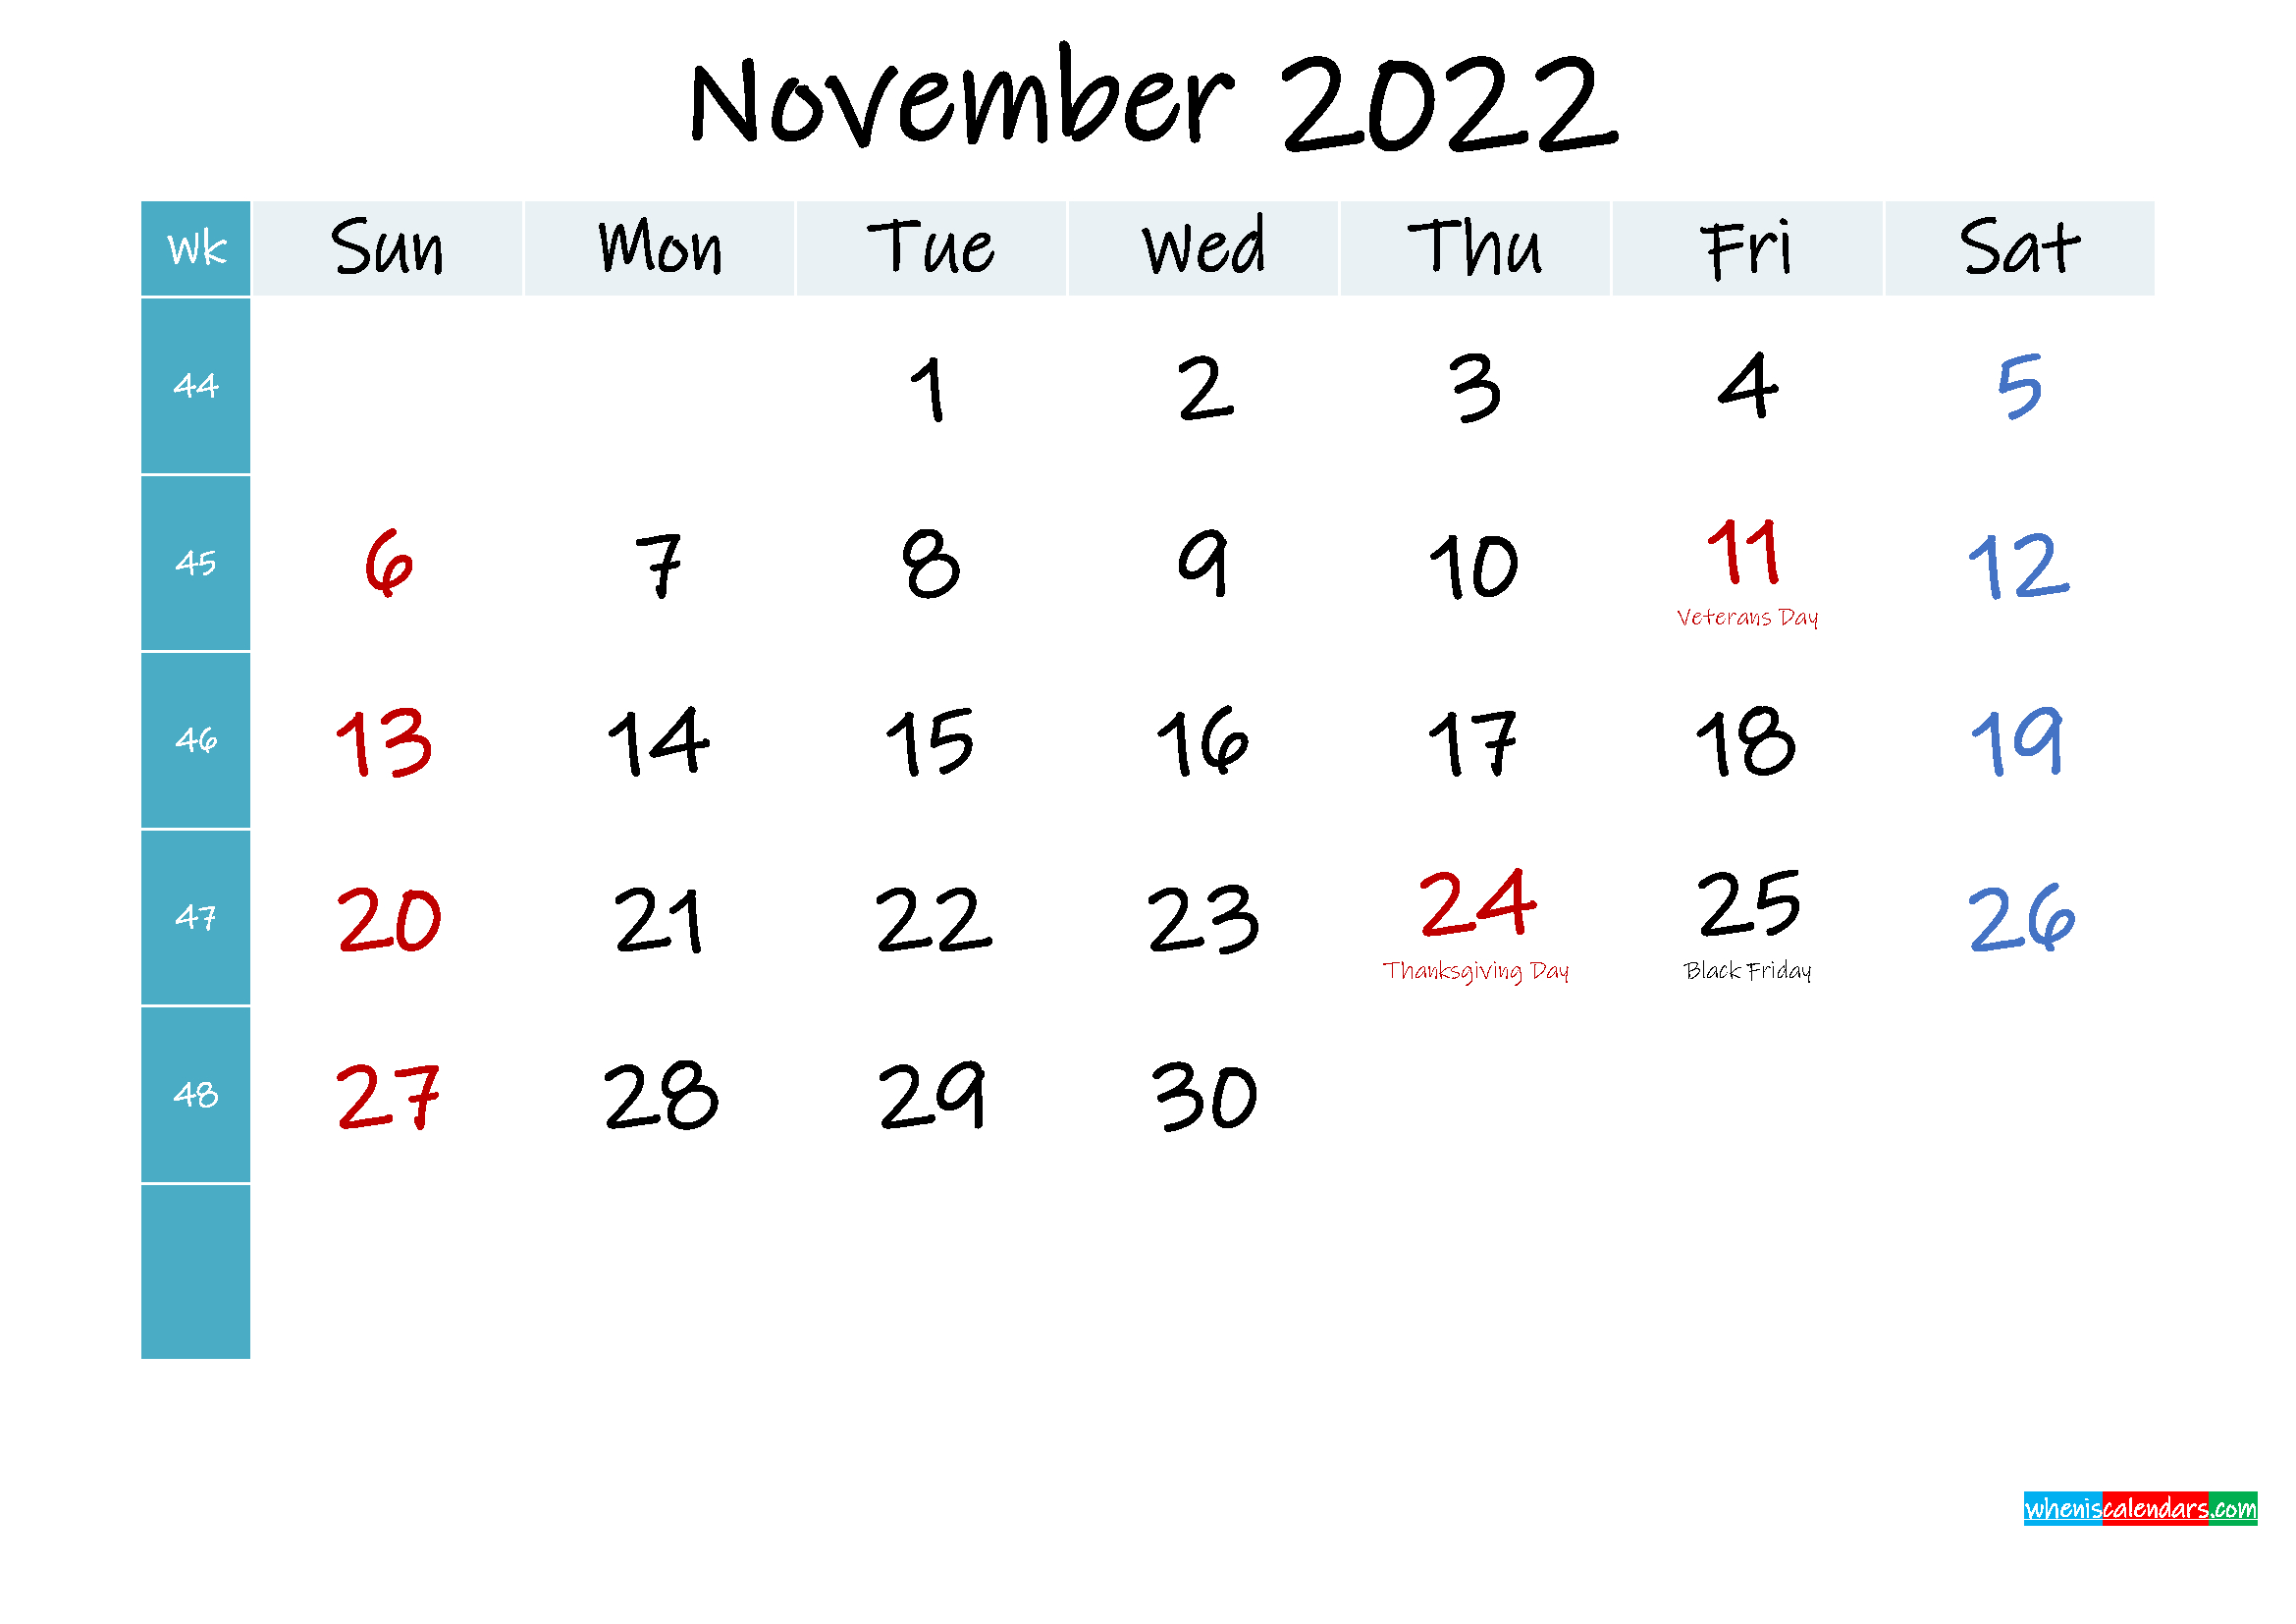 November 2022 Free Printable Calendar - Template No November 2022 Calendar Template